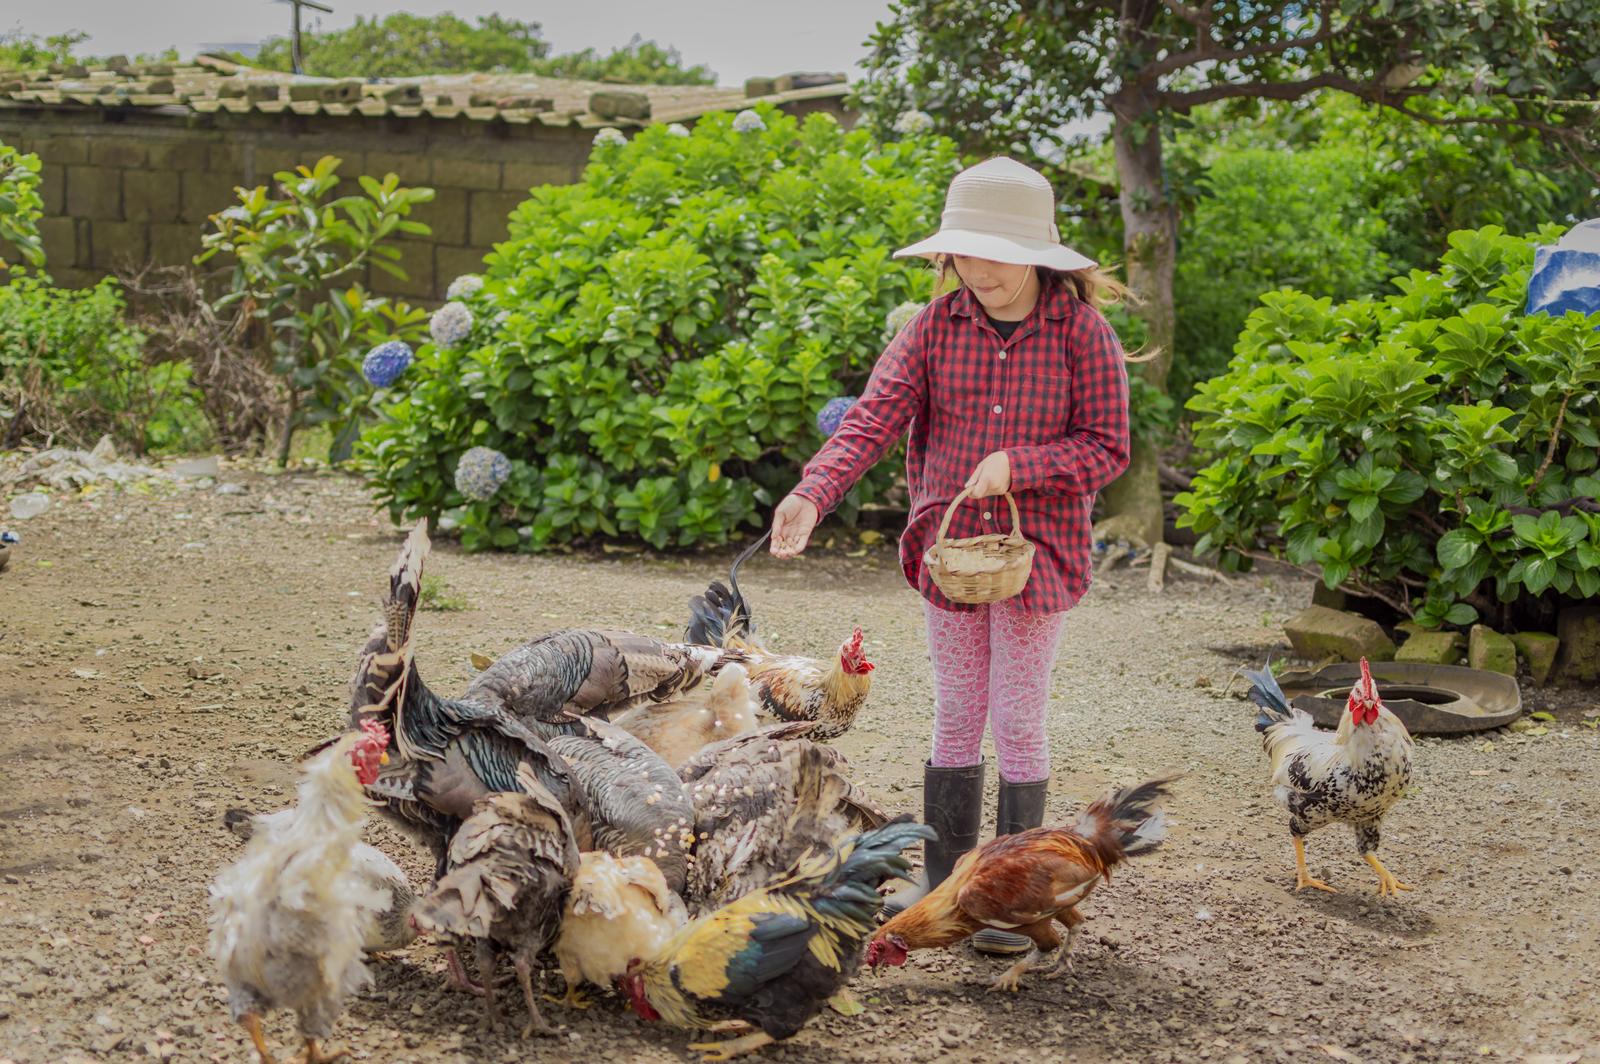 farmer girl feeding chickens and turkeys, farmer girl feeding chickens in the yard, girl feeding farm animals, farmer with turkeys and chickens.